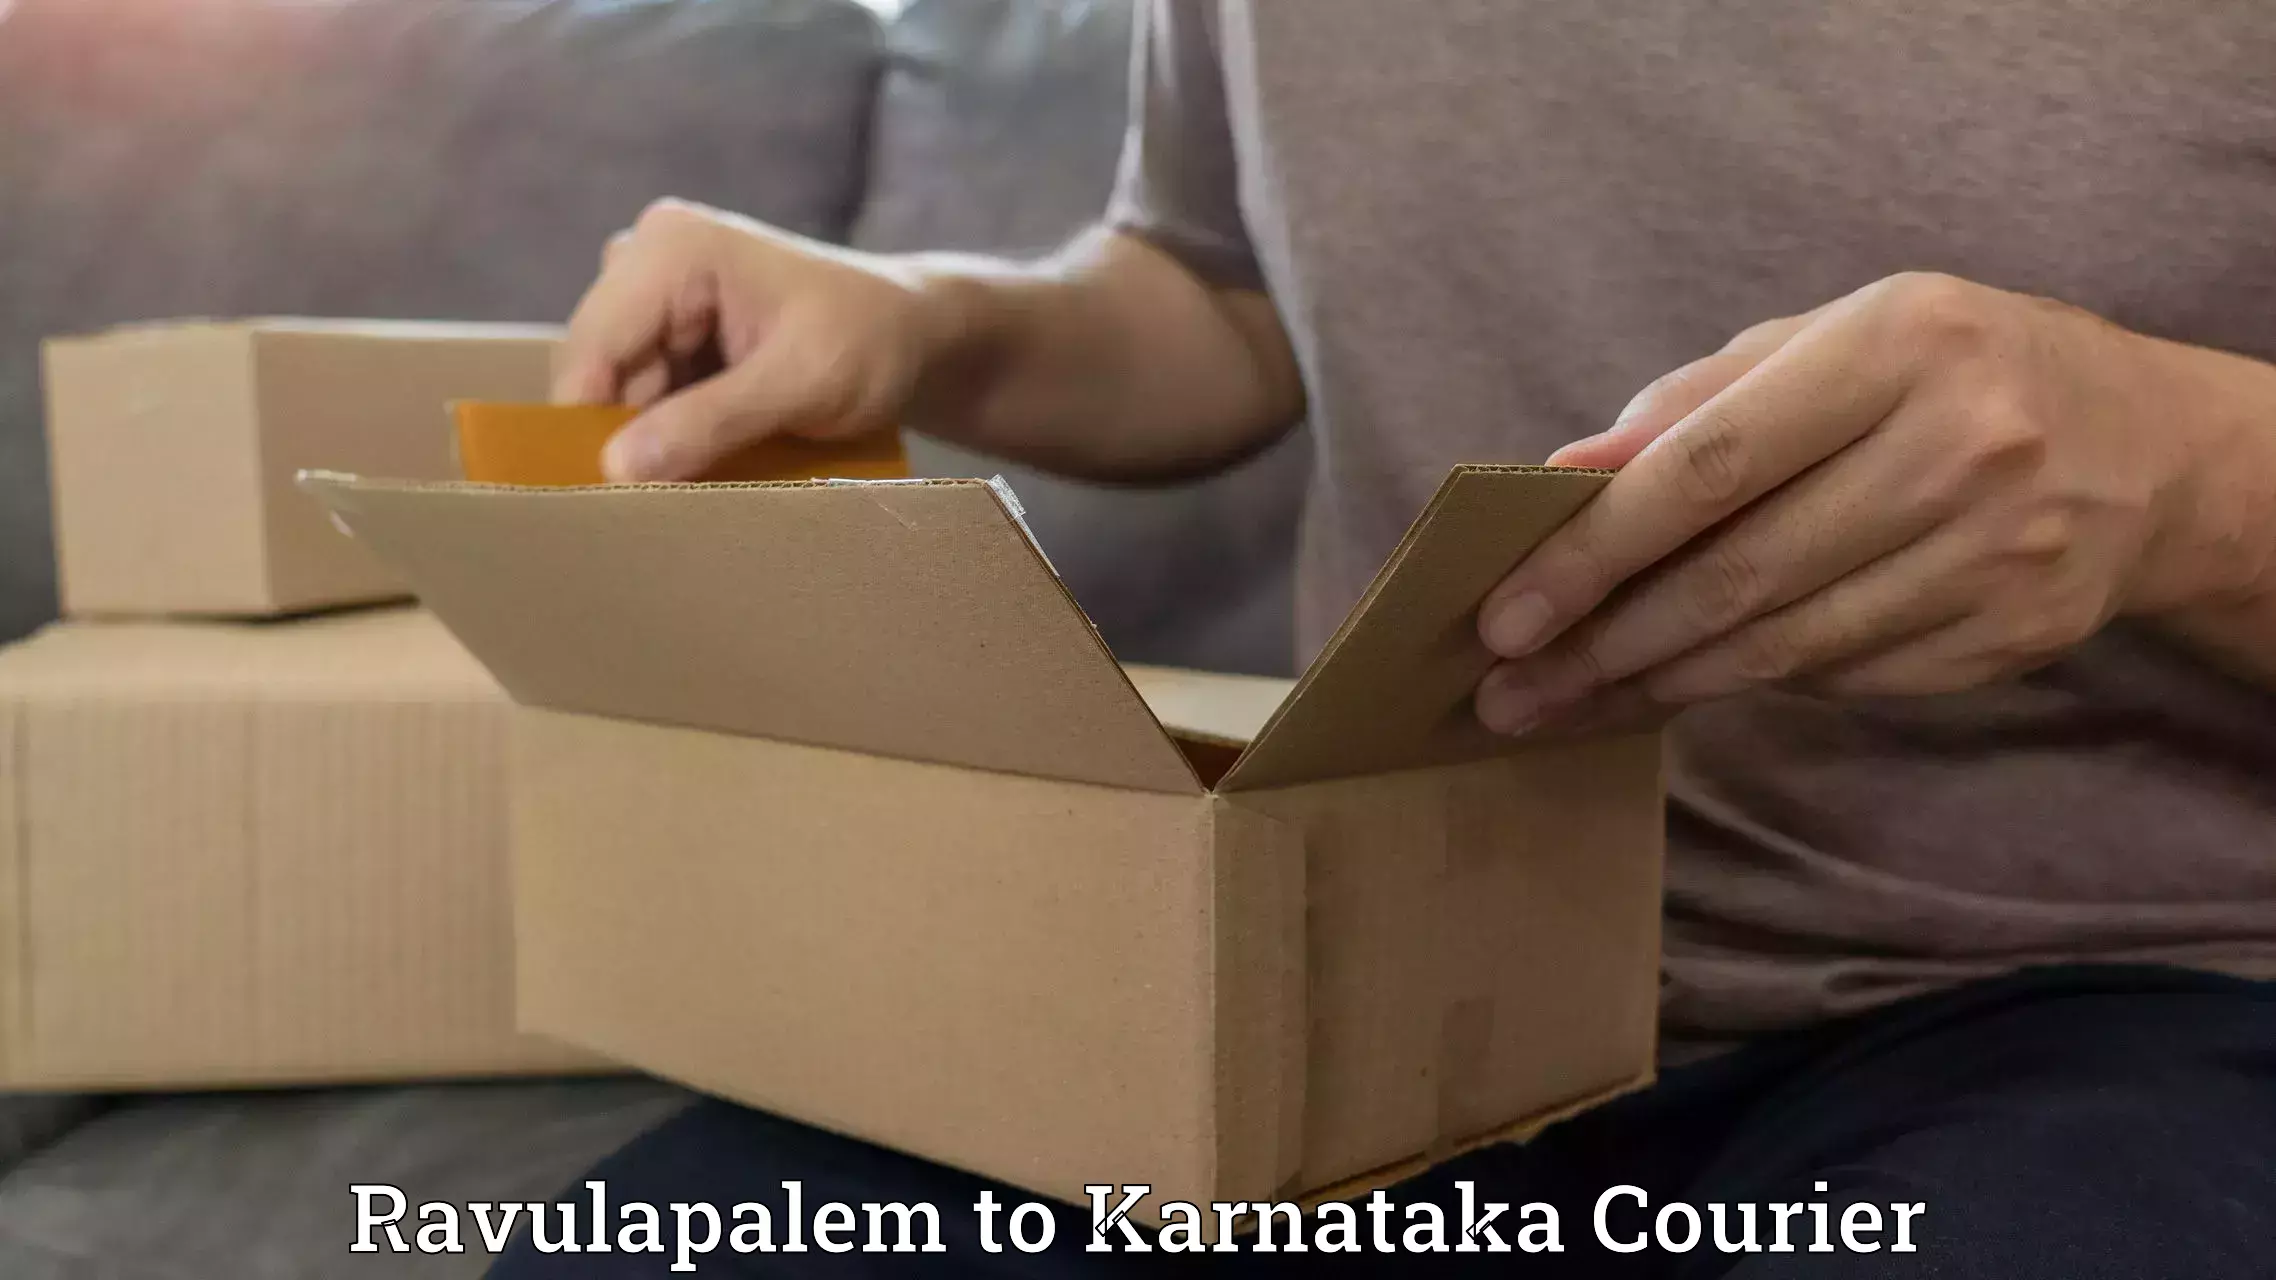 Courier service comparison Ravulapalem to Koratagere